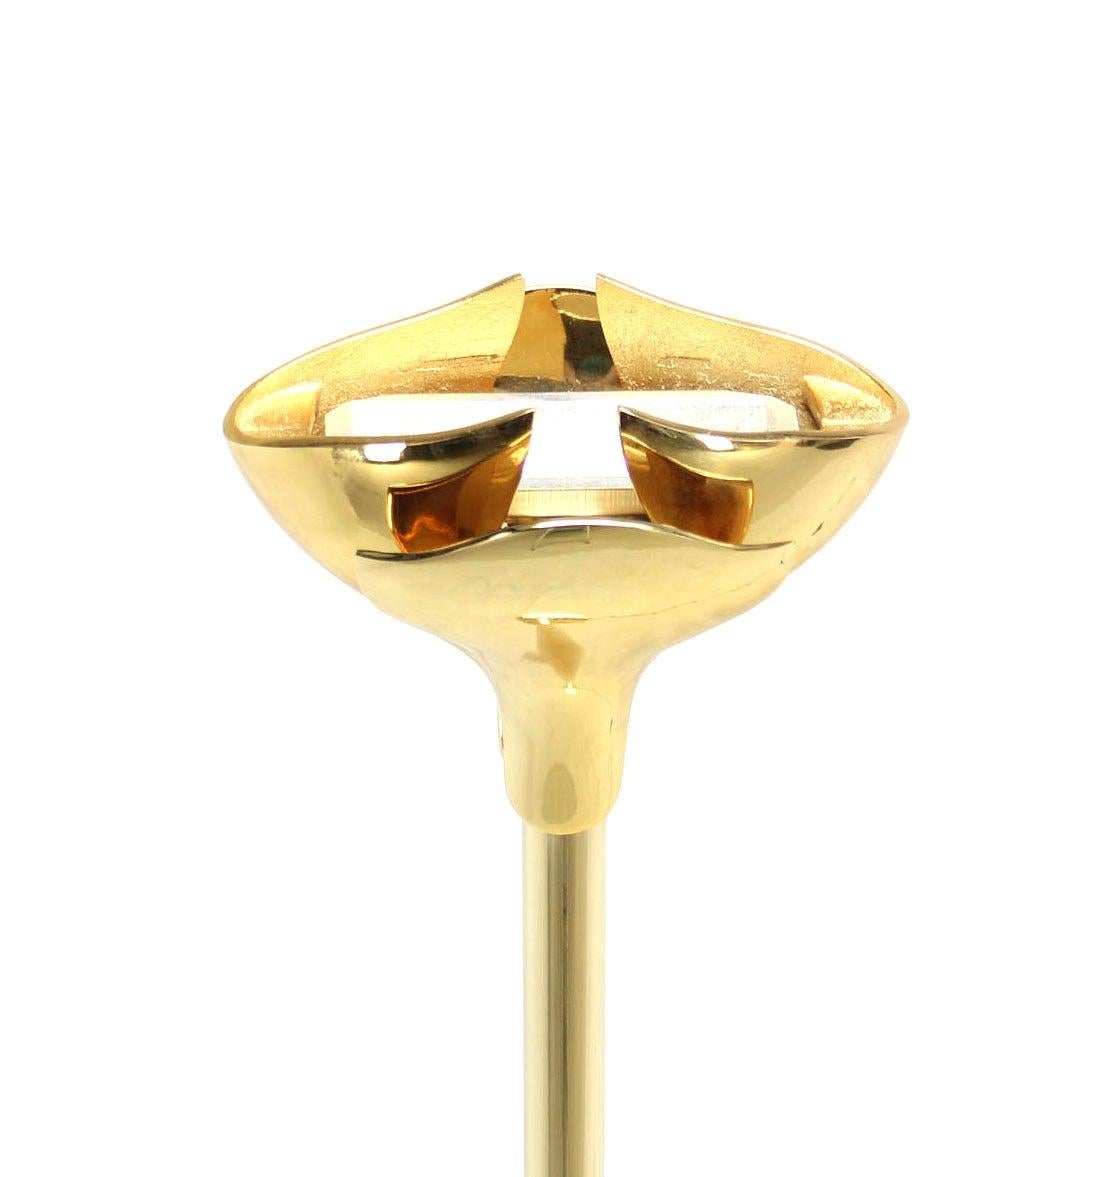 Italian Gianfranco Frattini Heavy Brass Floor Lamp Tourchere Dimmer Scallop Lotus Shade For Sale